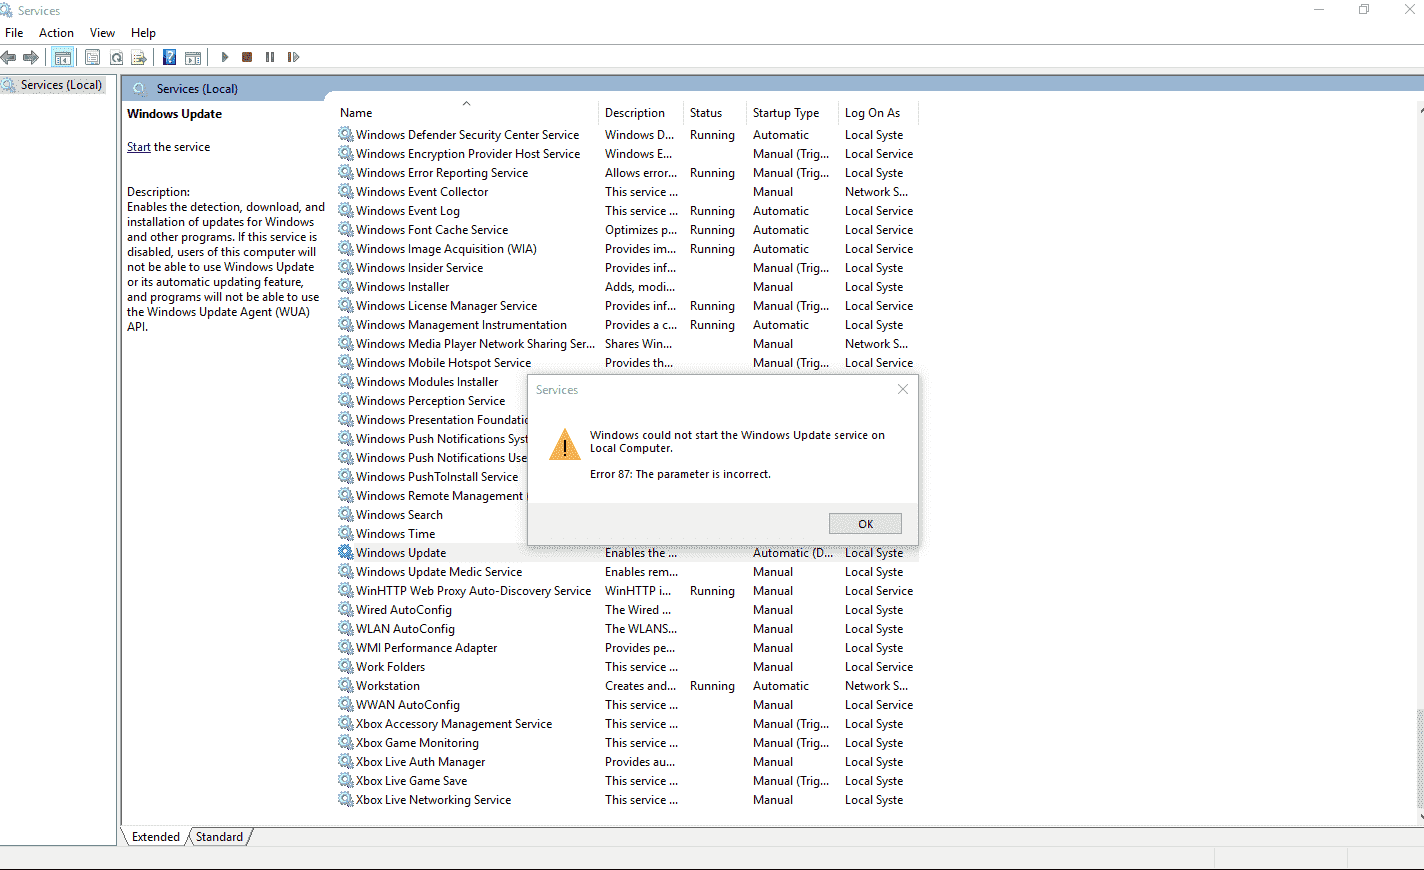 windows update service error 87 : the parameter is incorrect